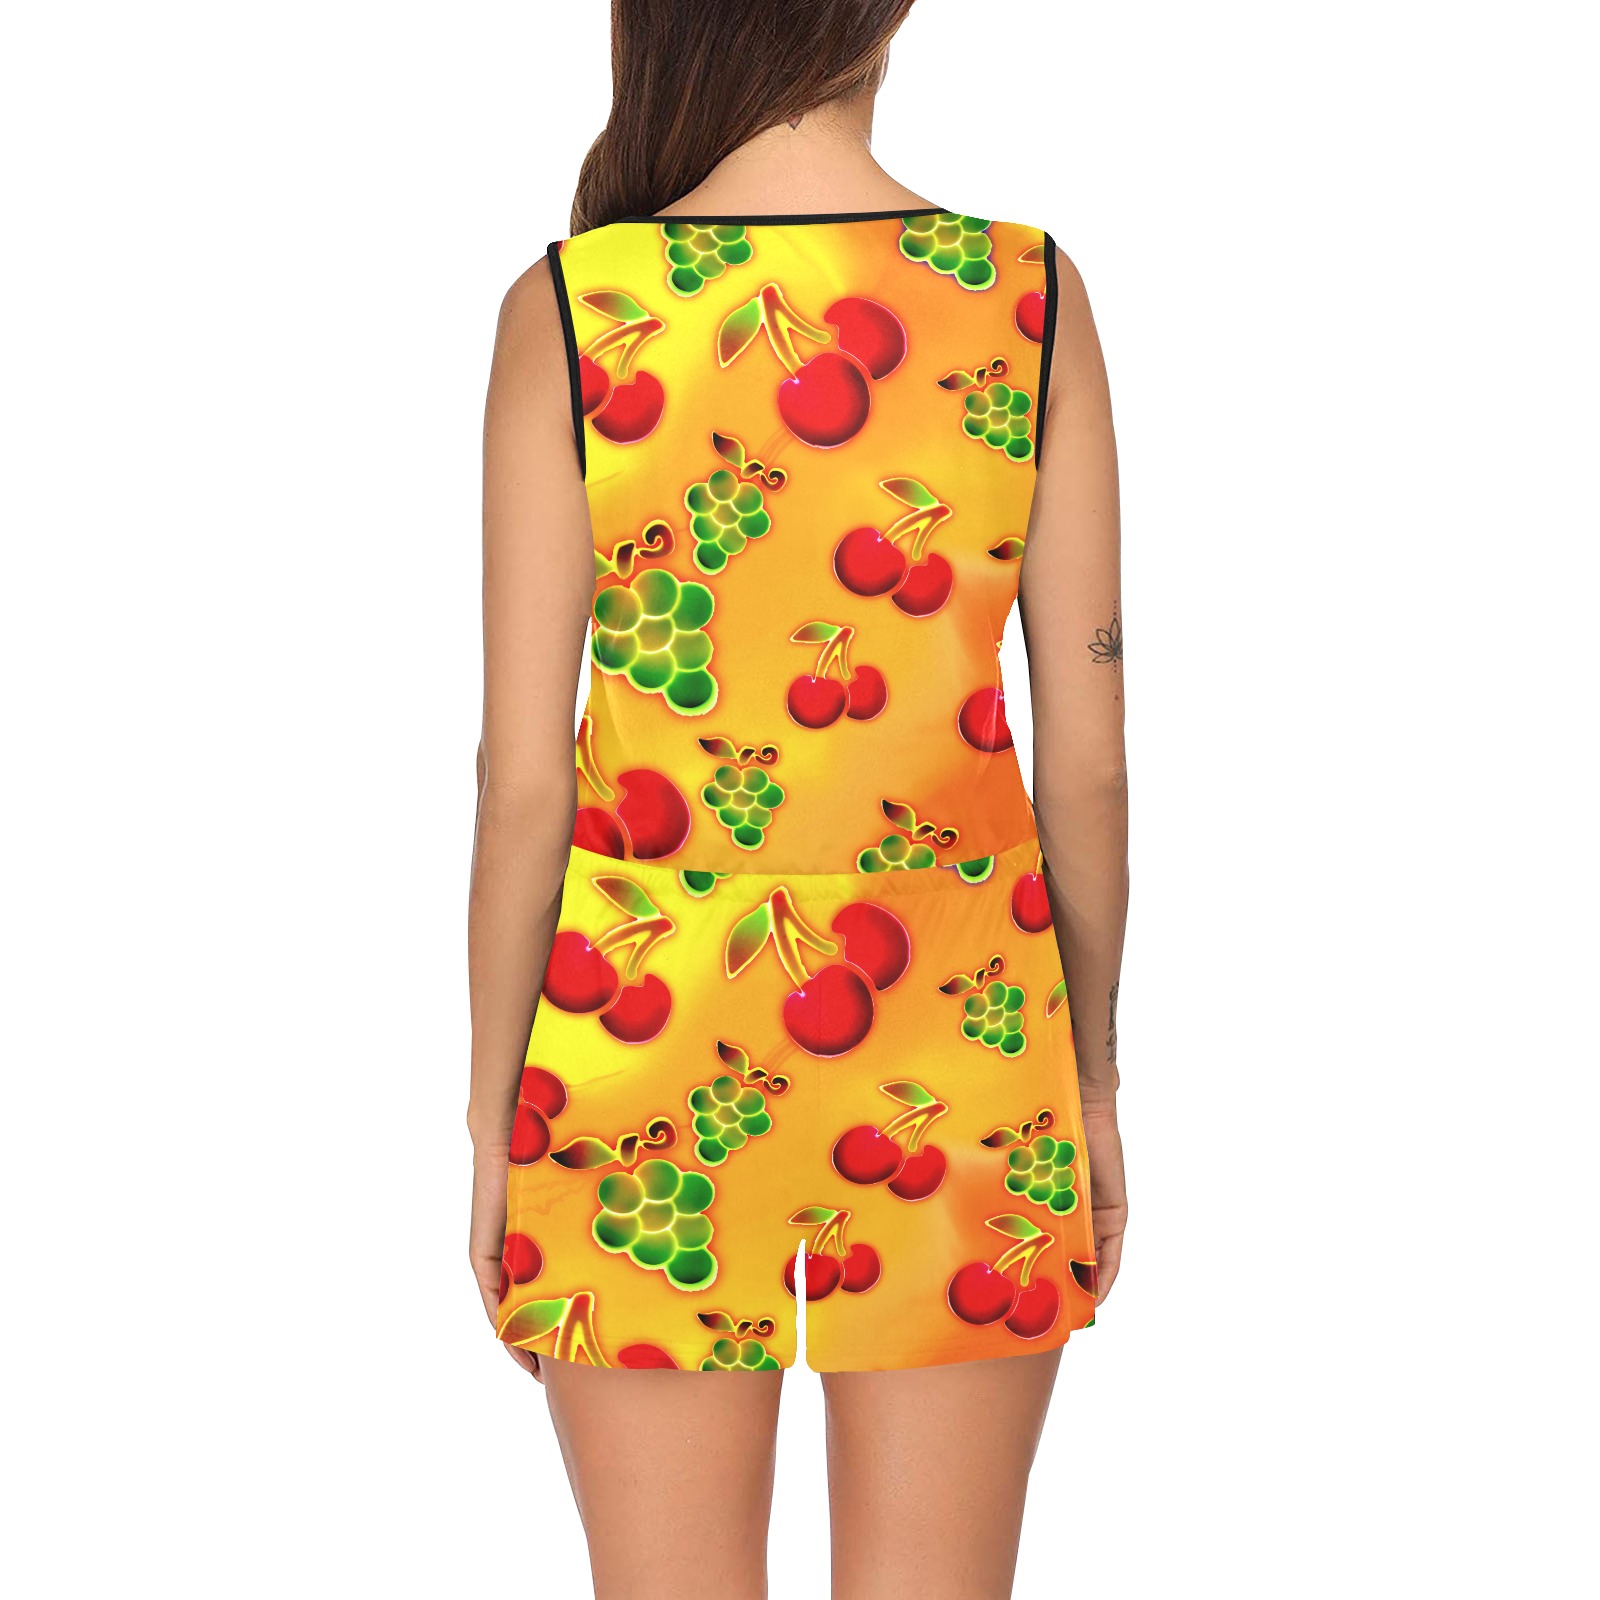 Fruit dance All Over Print Short Jumpsuit